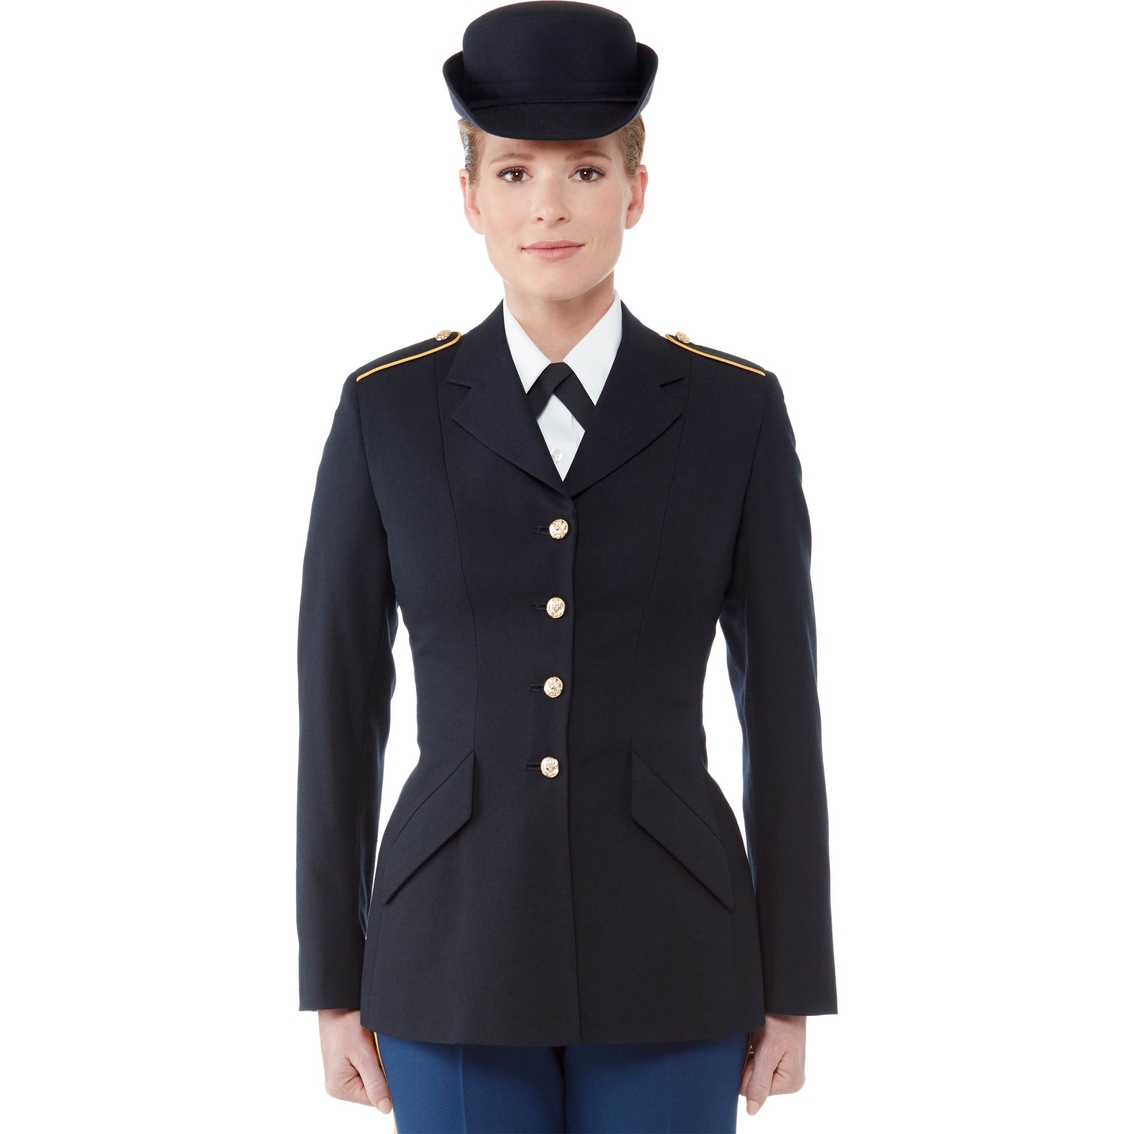 Female Dress Blue Uniform 71